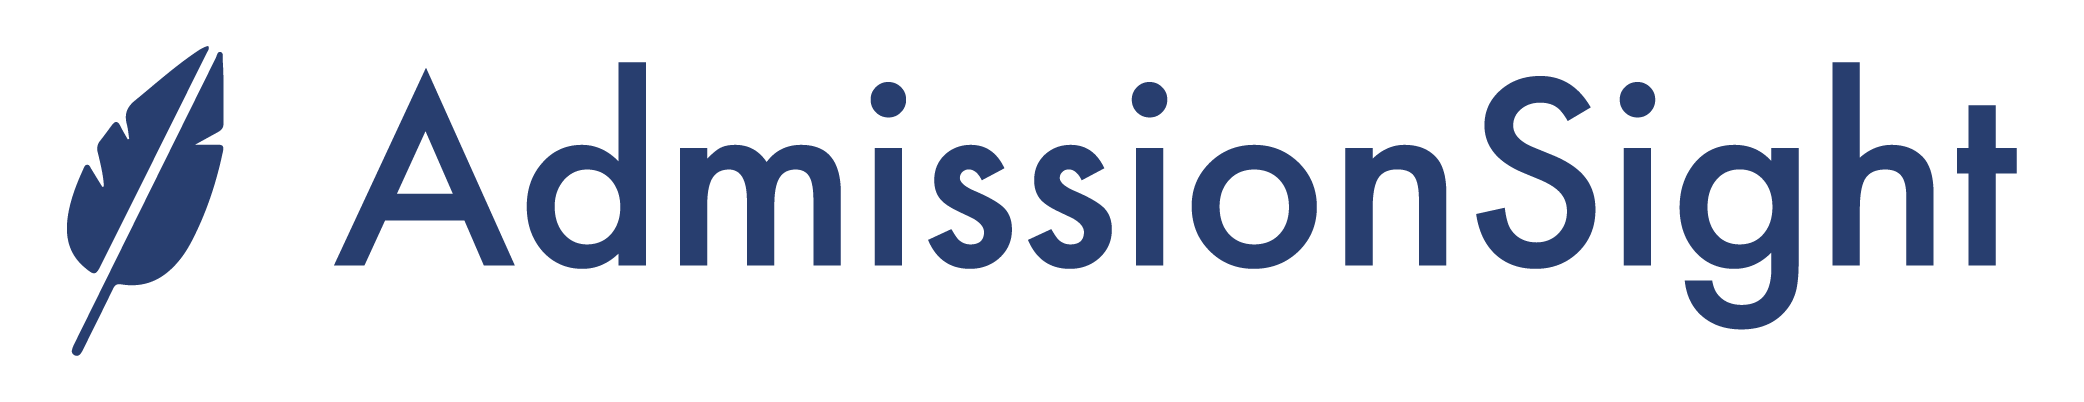 AdmissionSight_logo